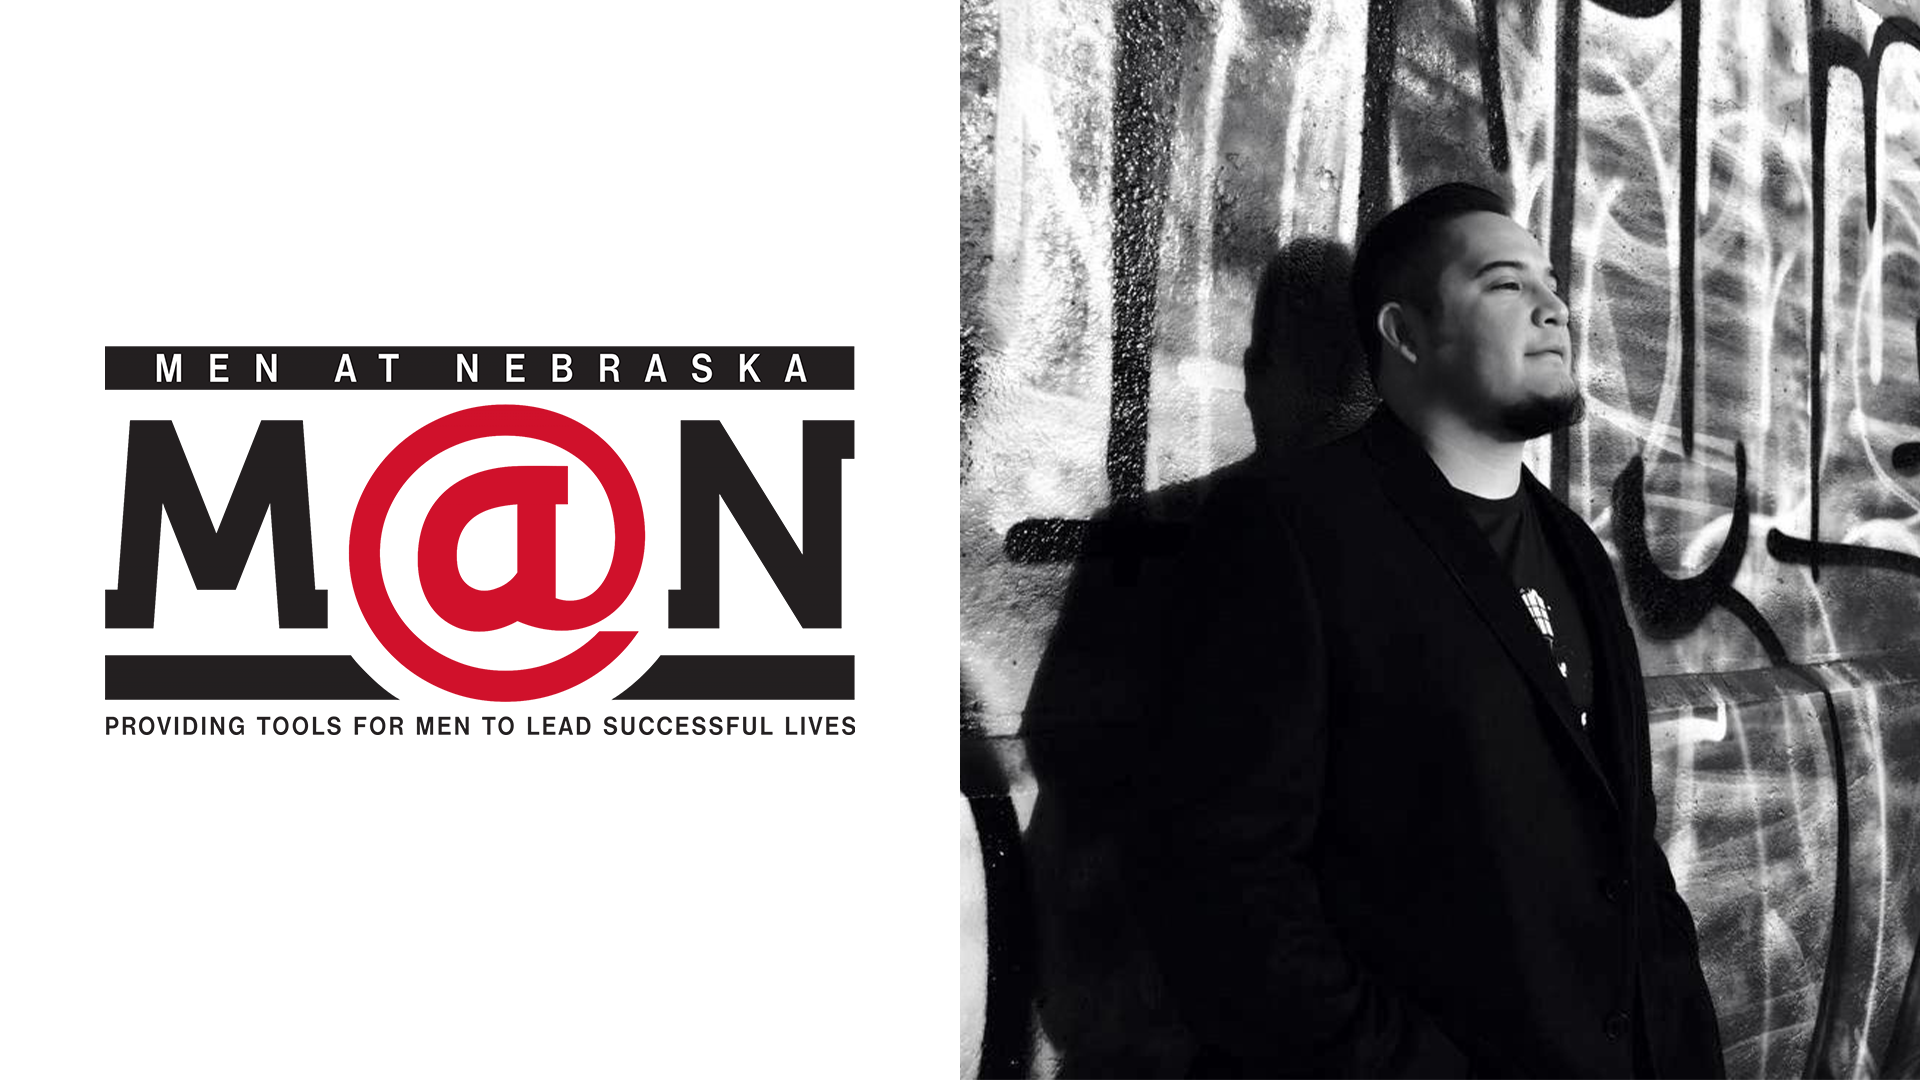 Ángel García and the Men-at-Nebraska logo; links to news story